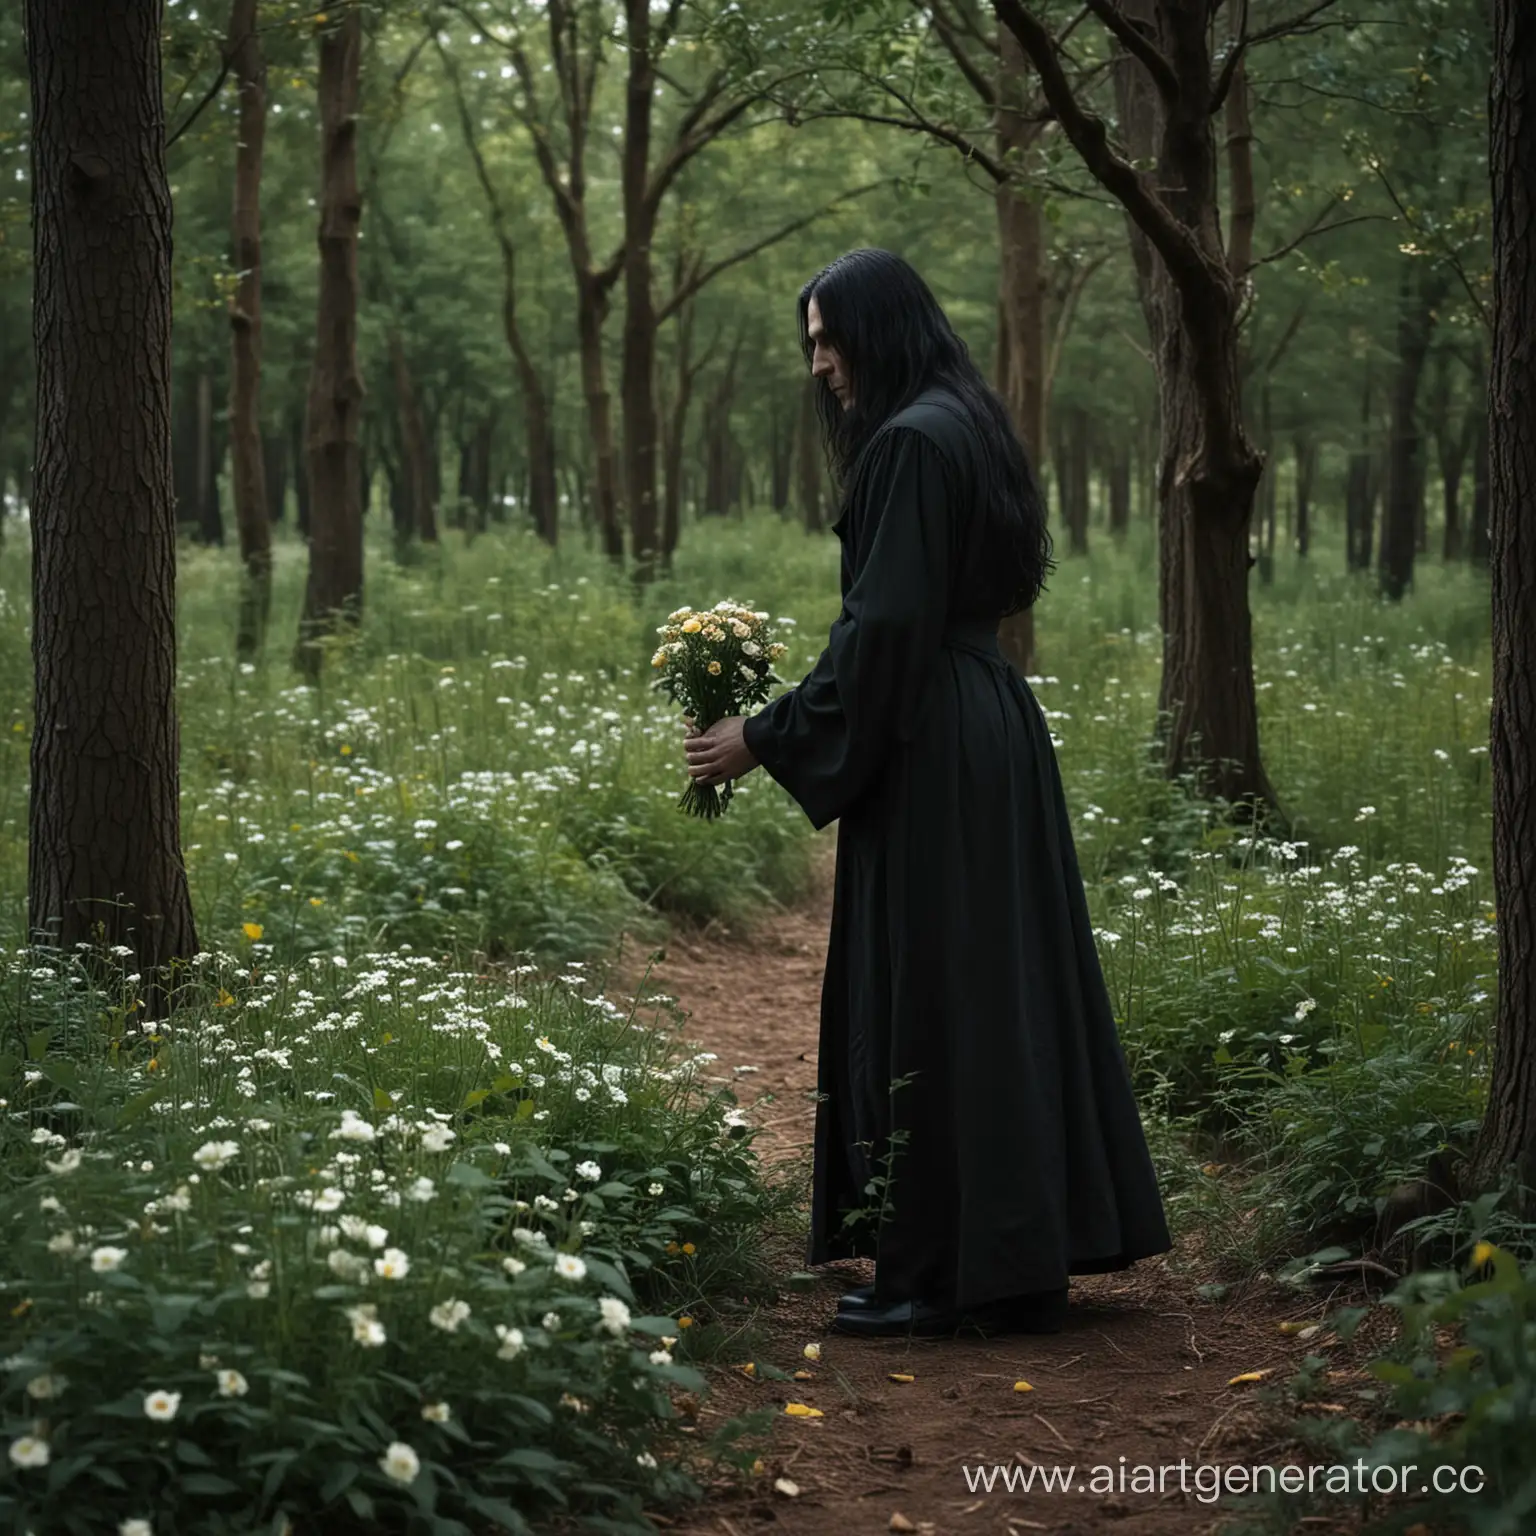 DarkHaired-Figure-Gathering-Forest-Flowers-in-SnapeLike-Scene